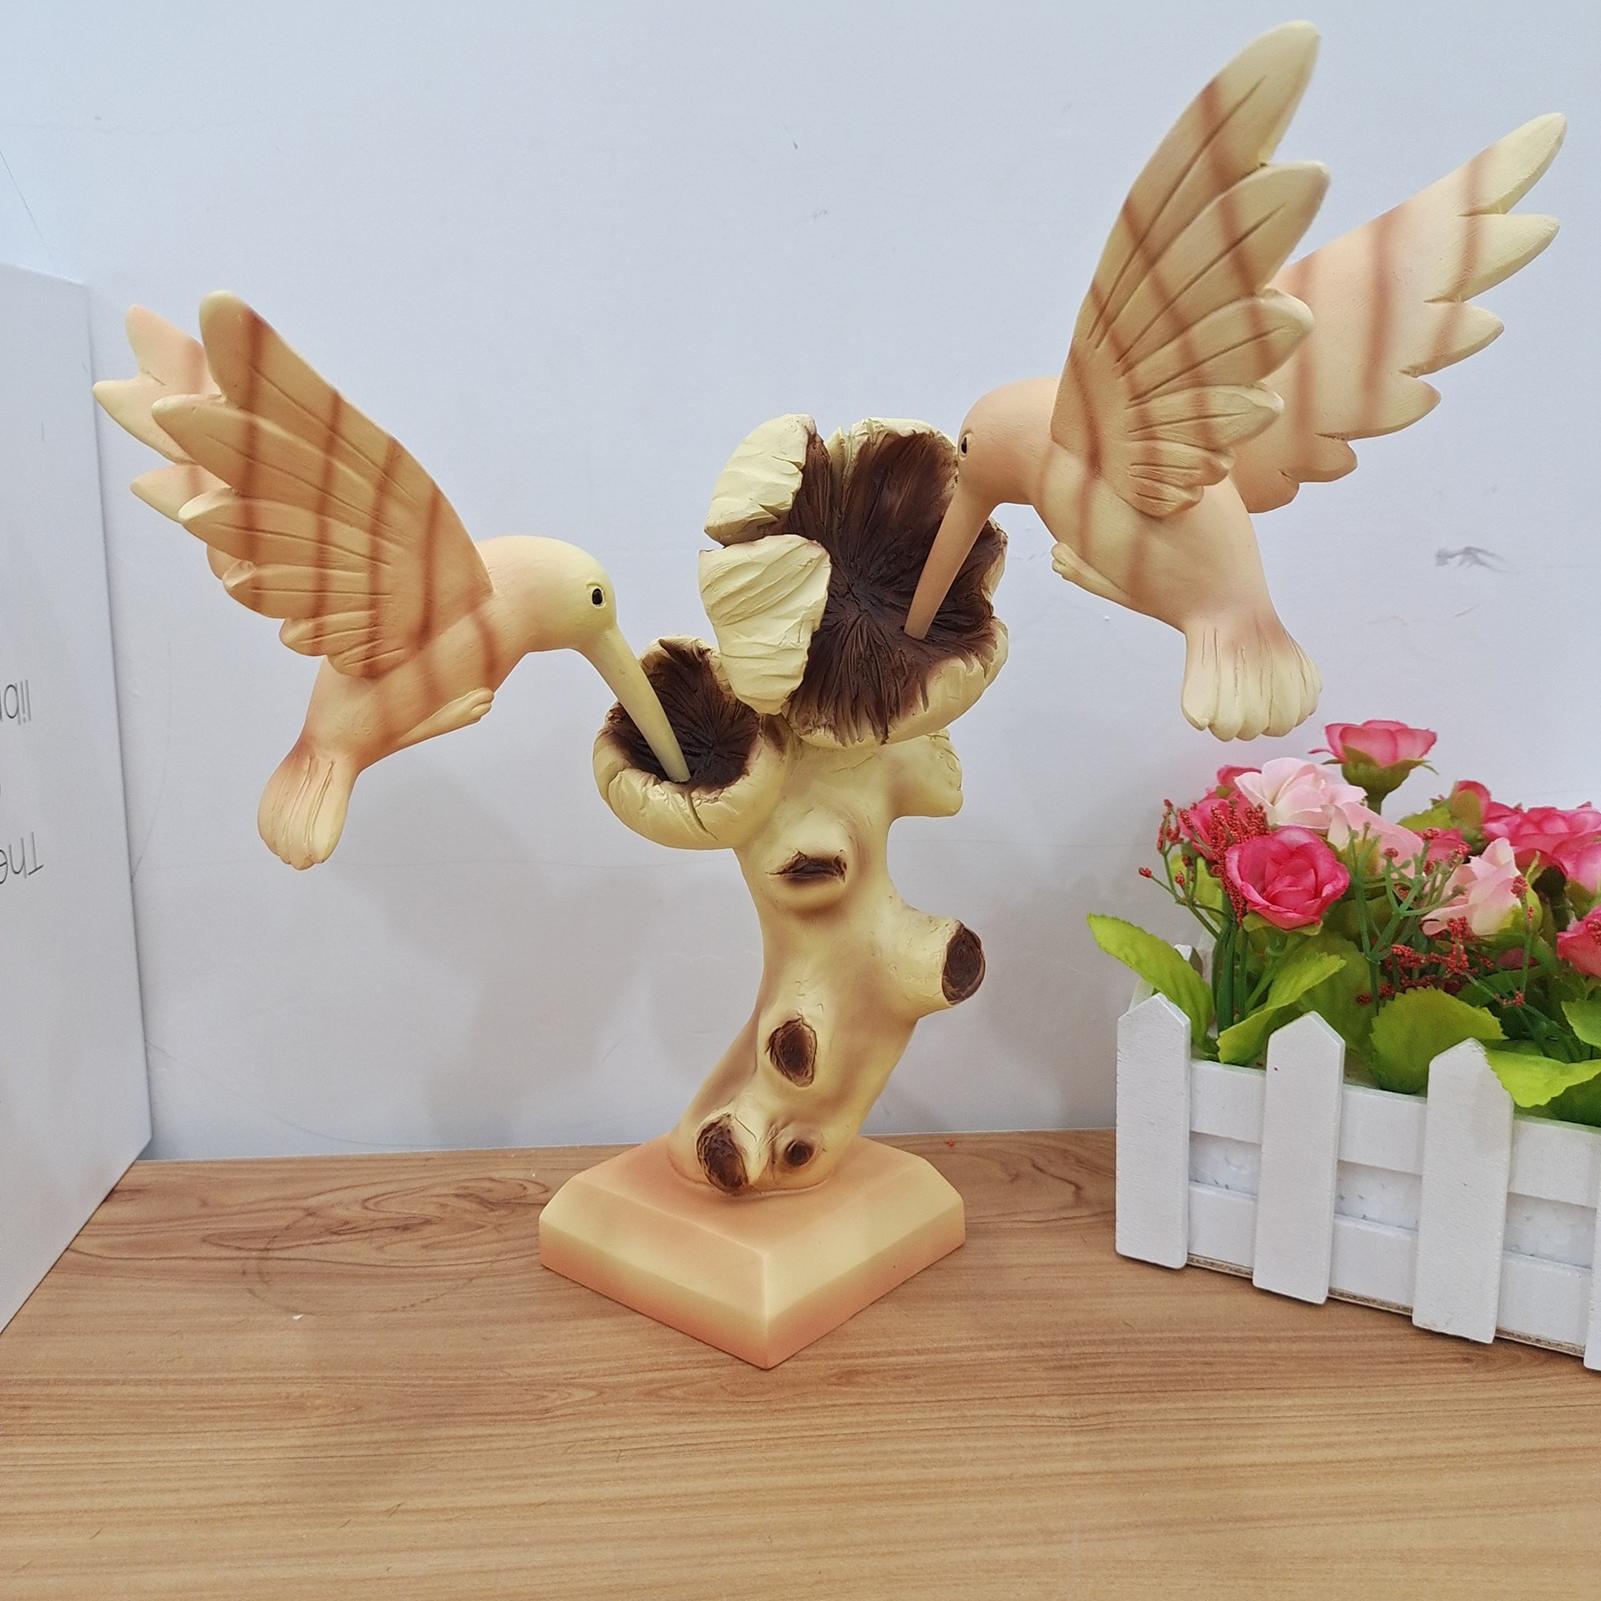 Wooden Color Hummingbird Handmade Sculpture Resin Craft Ornament Animal Sculpture Artistic Carving Bird Home Decorations